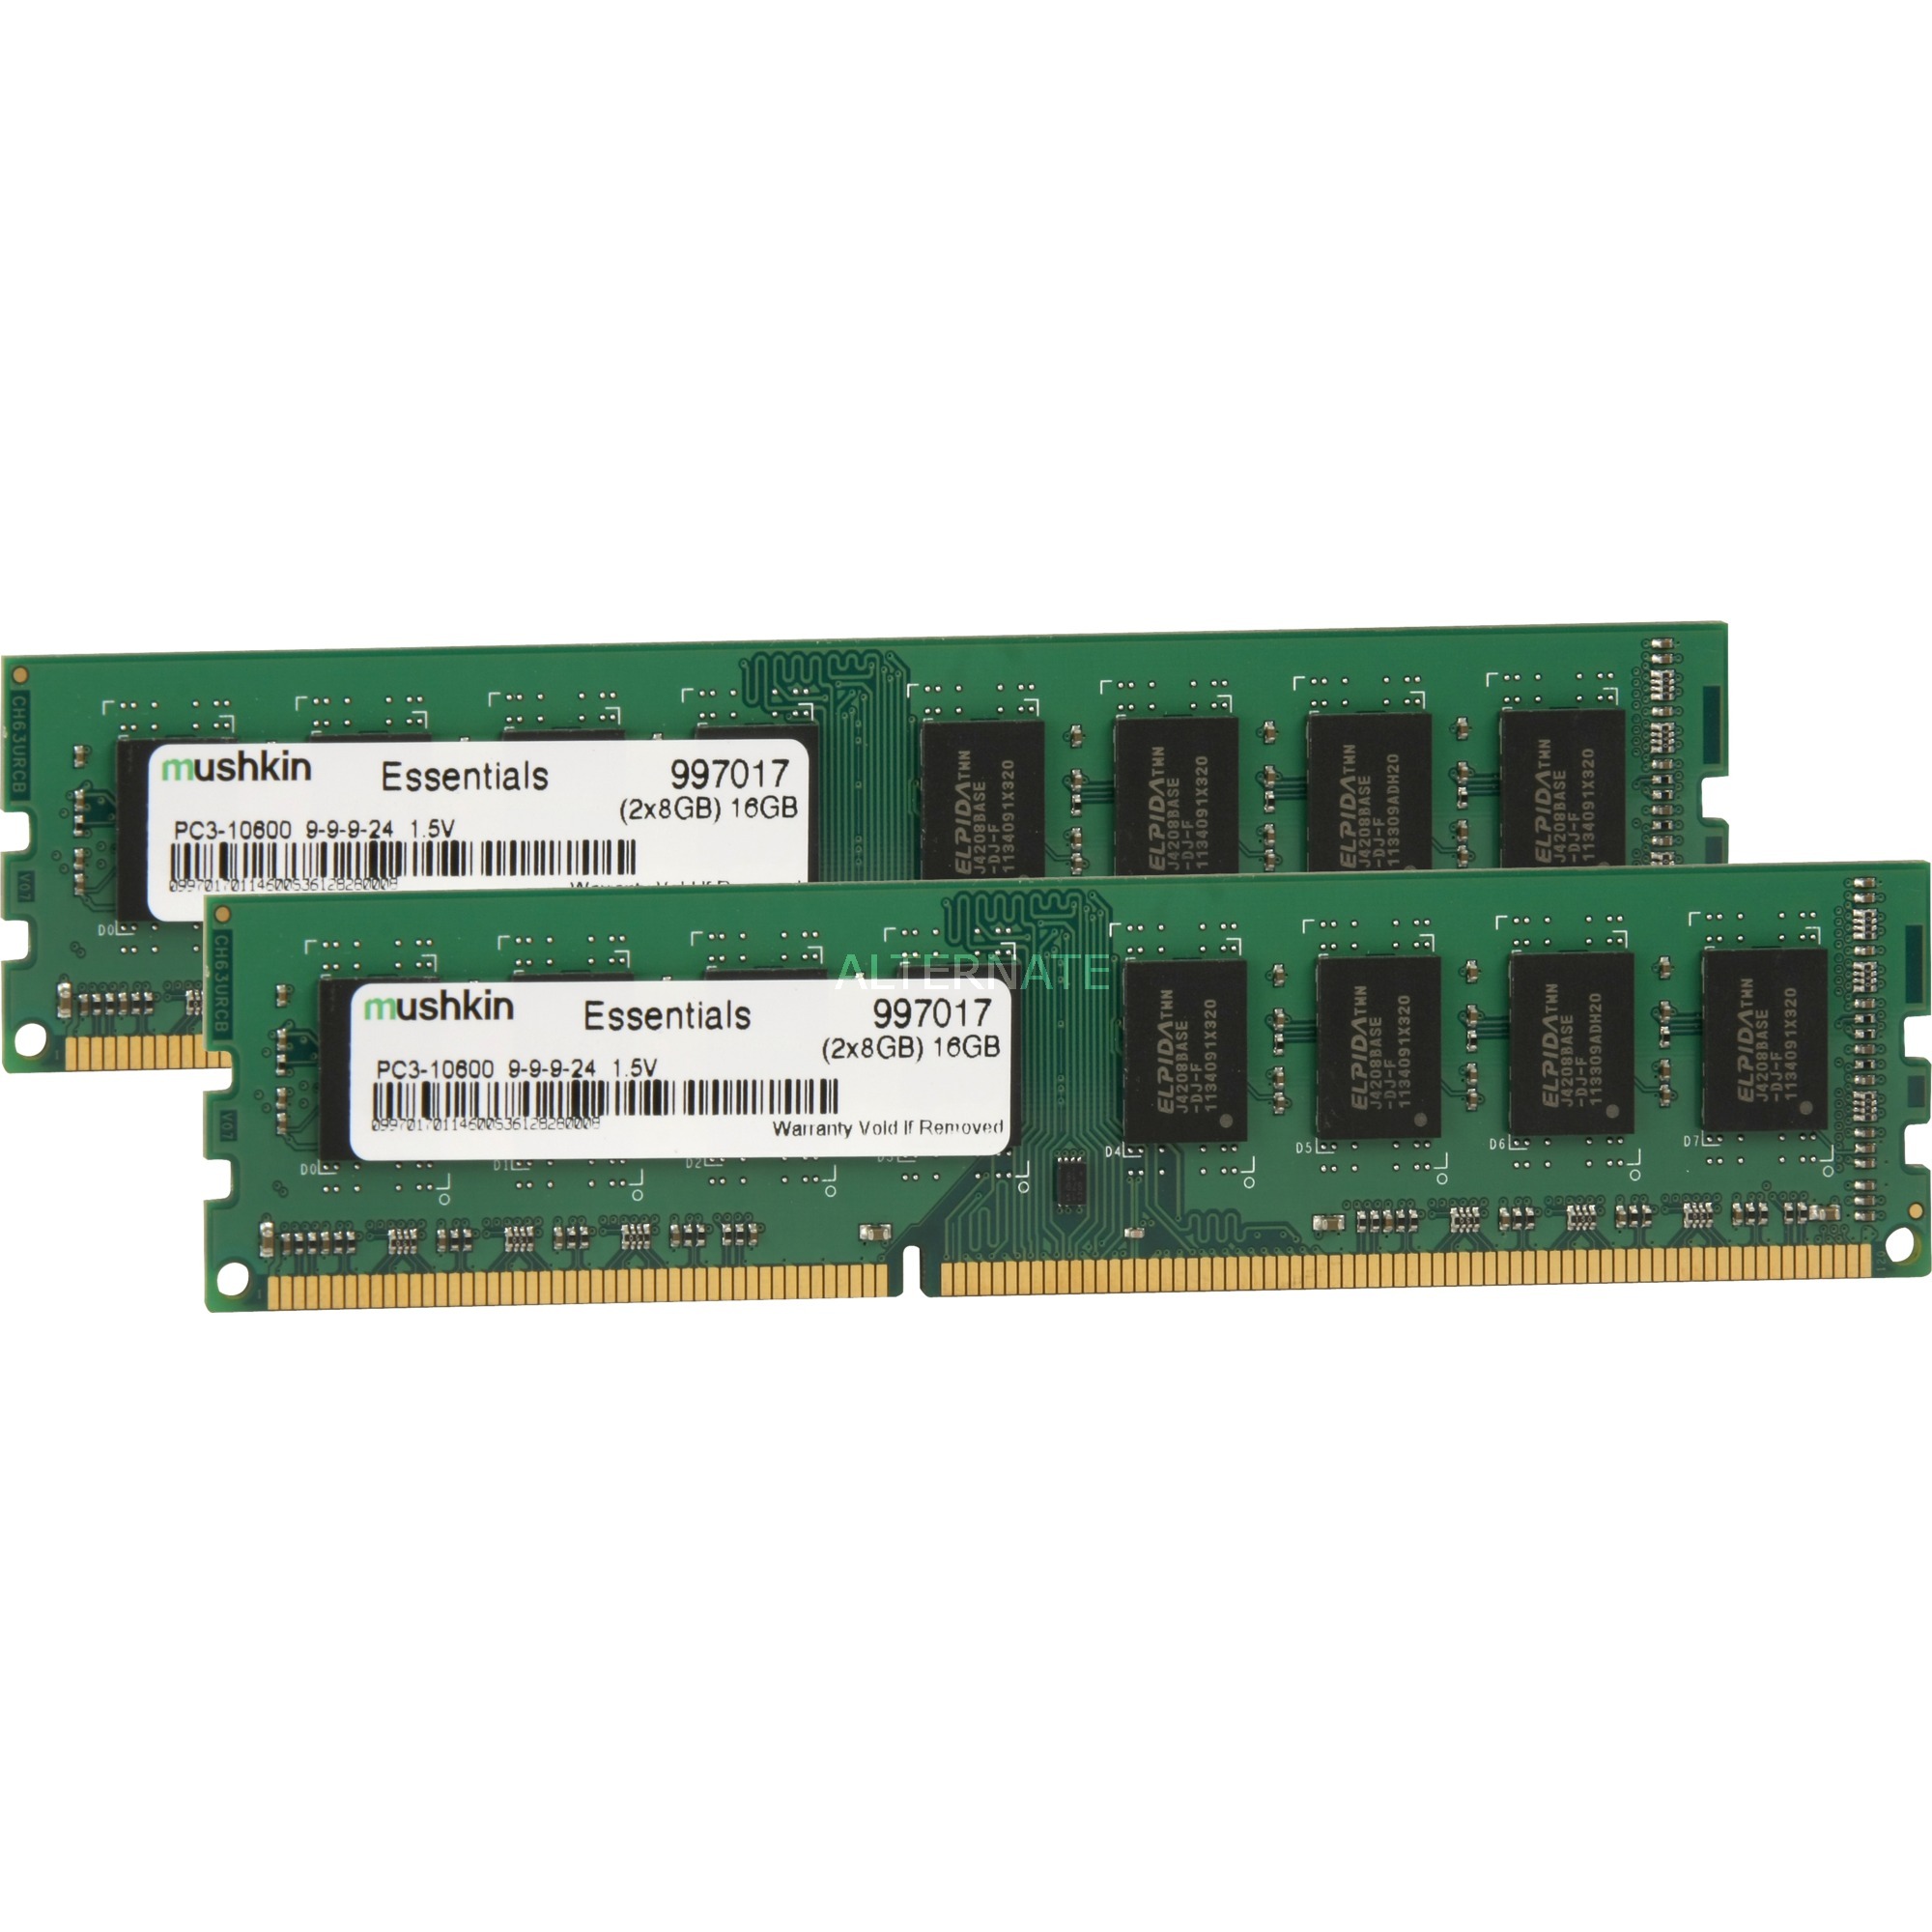 Mushkin Essentials PC3-10600 Arbeitsspeicher 16GB (1333 MHz, 240-polig, 2x 8GB) DDR3-RAM Kit